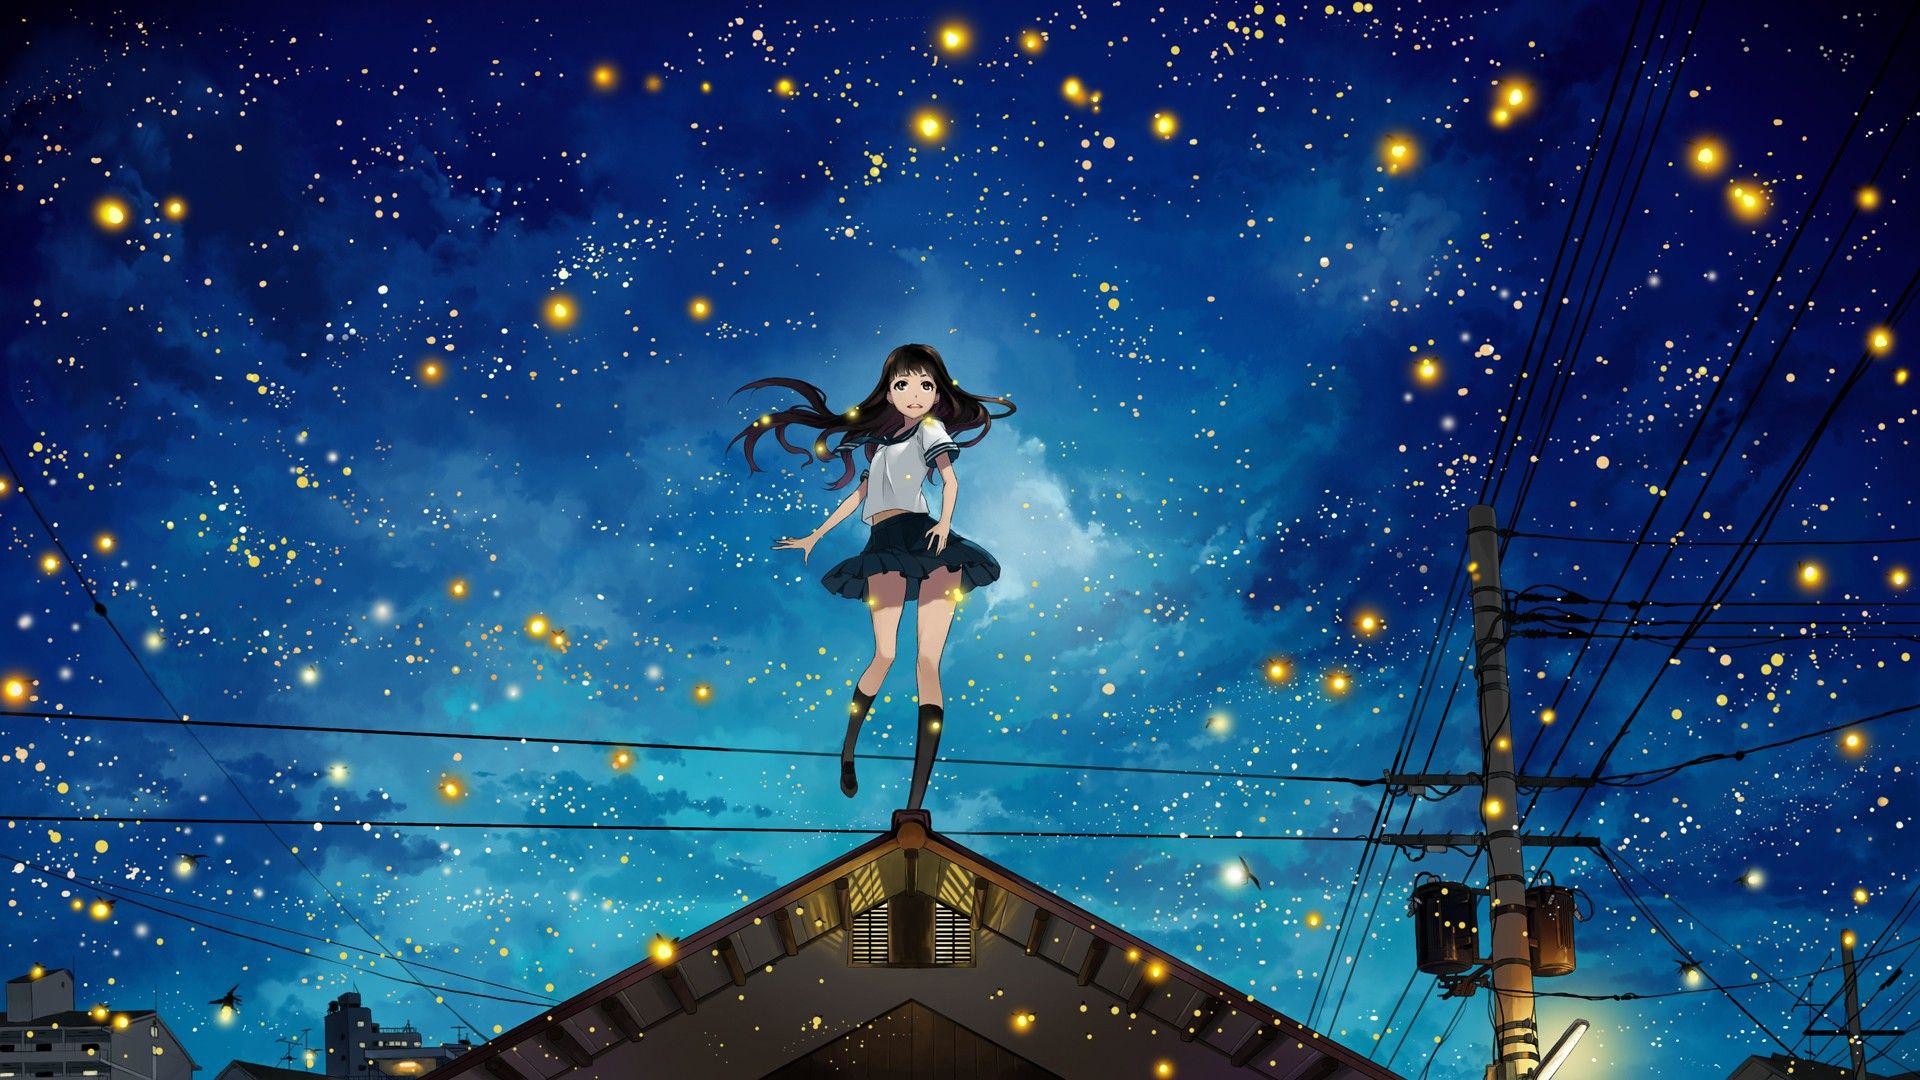 Anime girl Wallpaper 4K Night Surreal Blue background 9787